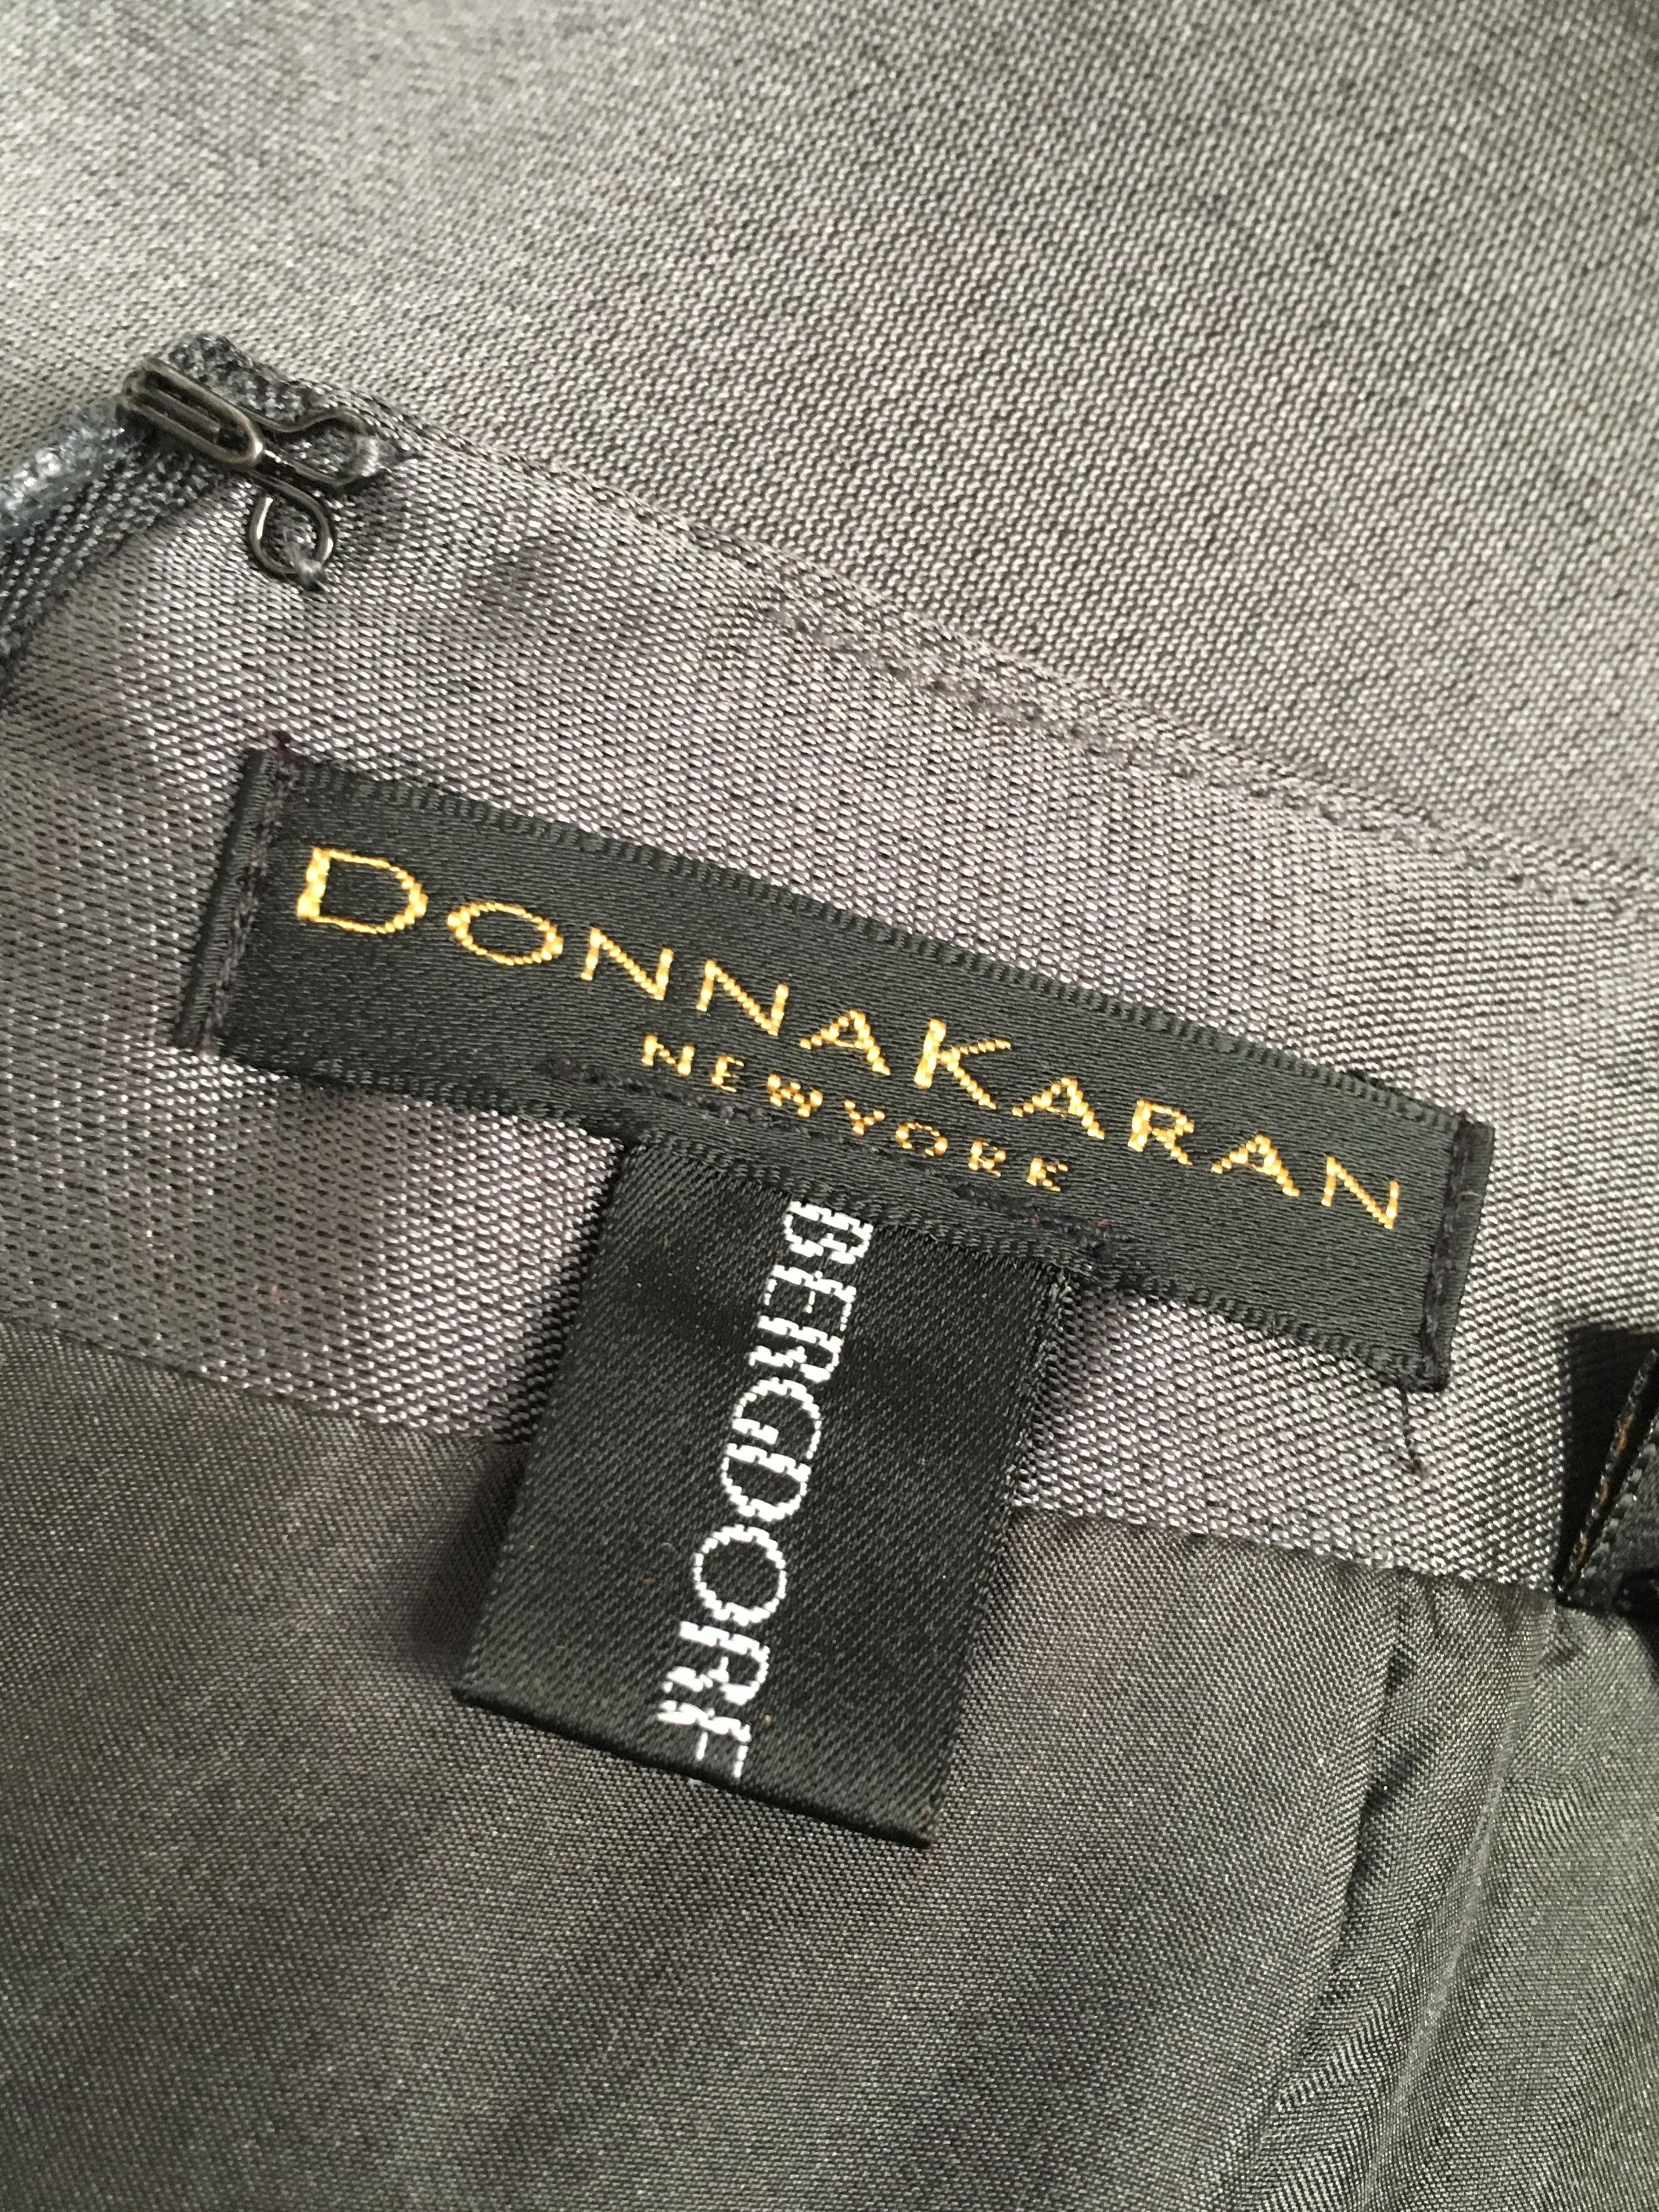 Donna Karan for Bergdorf Goodman 1990s Gray Silk Long Skirt Size 4. For Sale 11